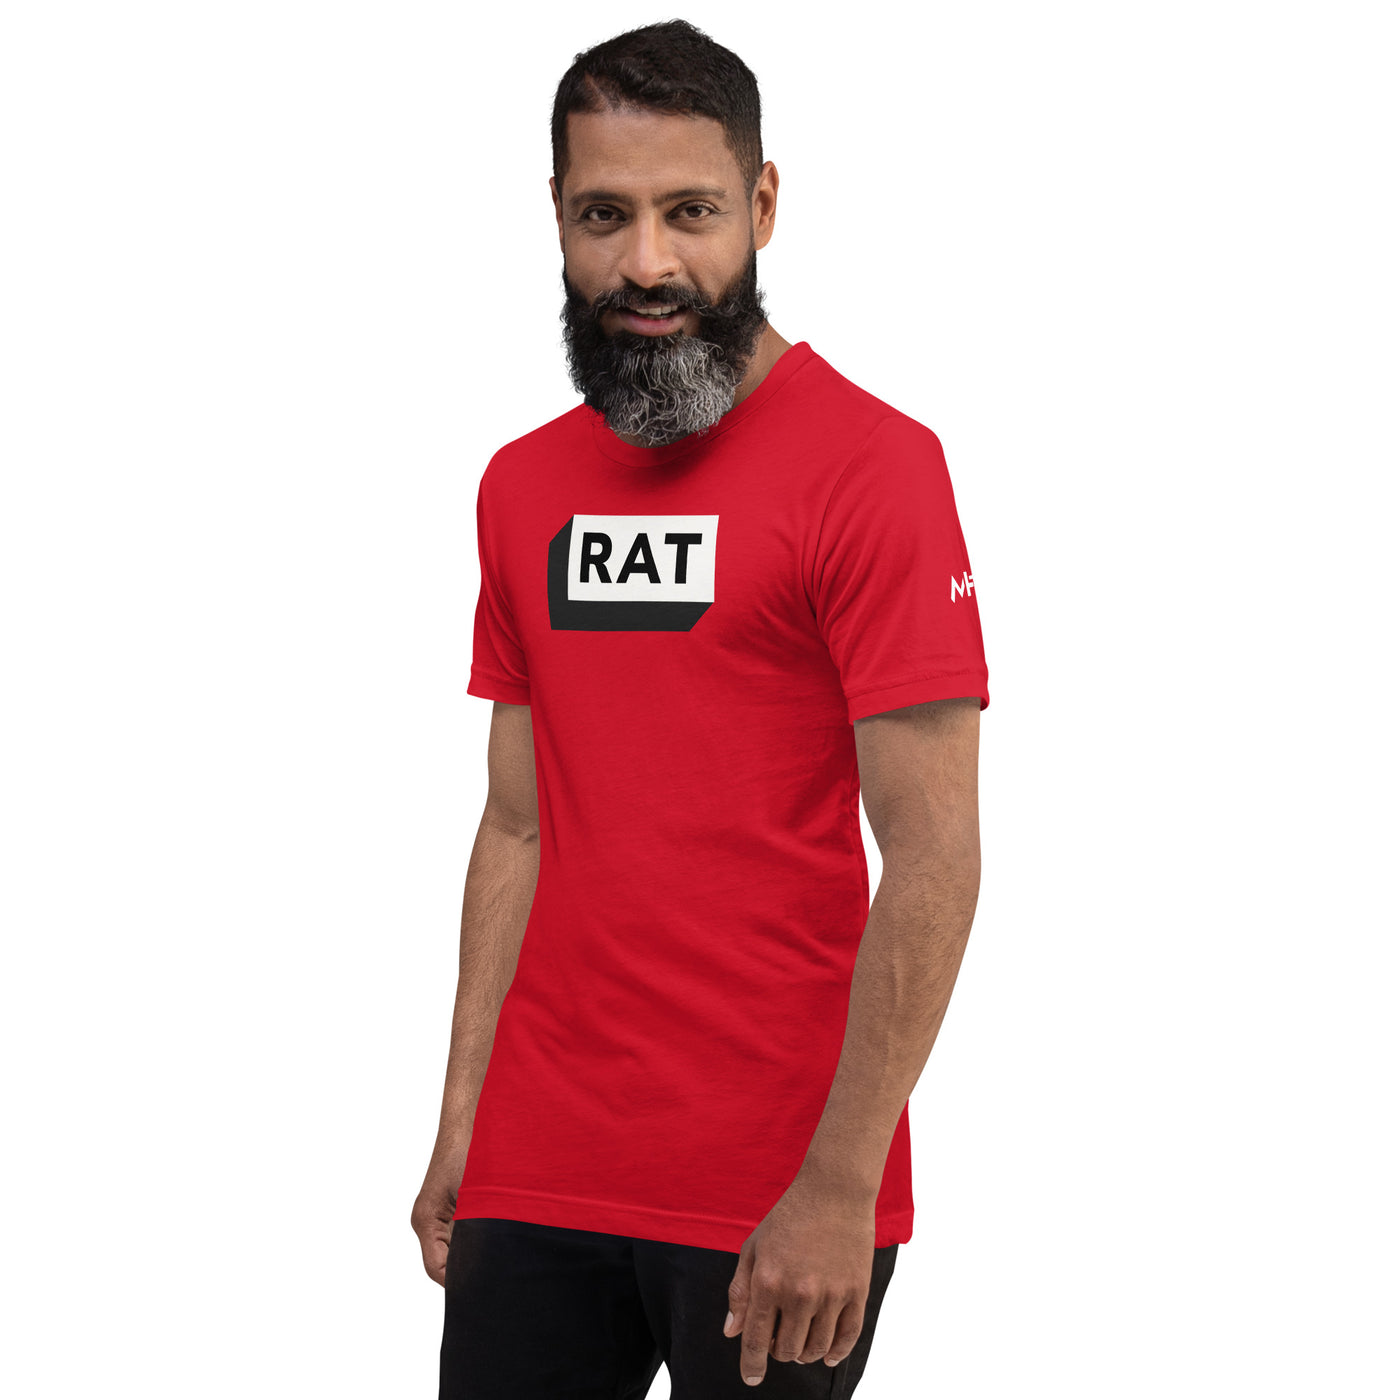 RAT (Remote Access Trojan) - Unisex t-shirt